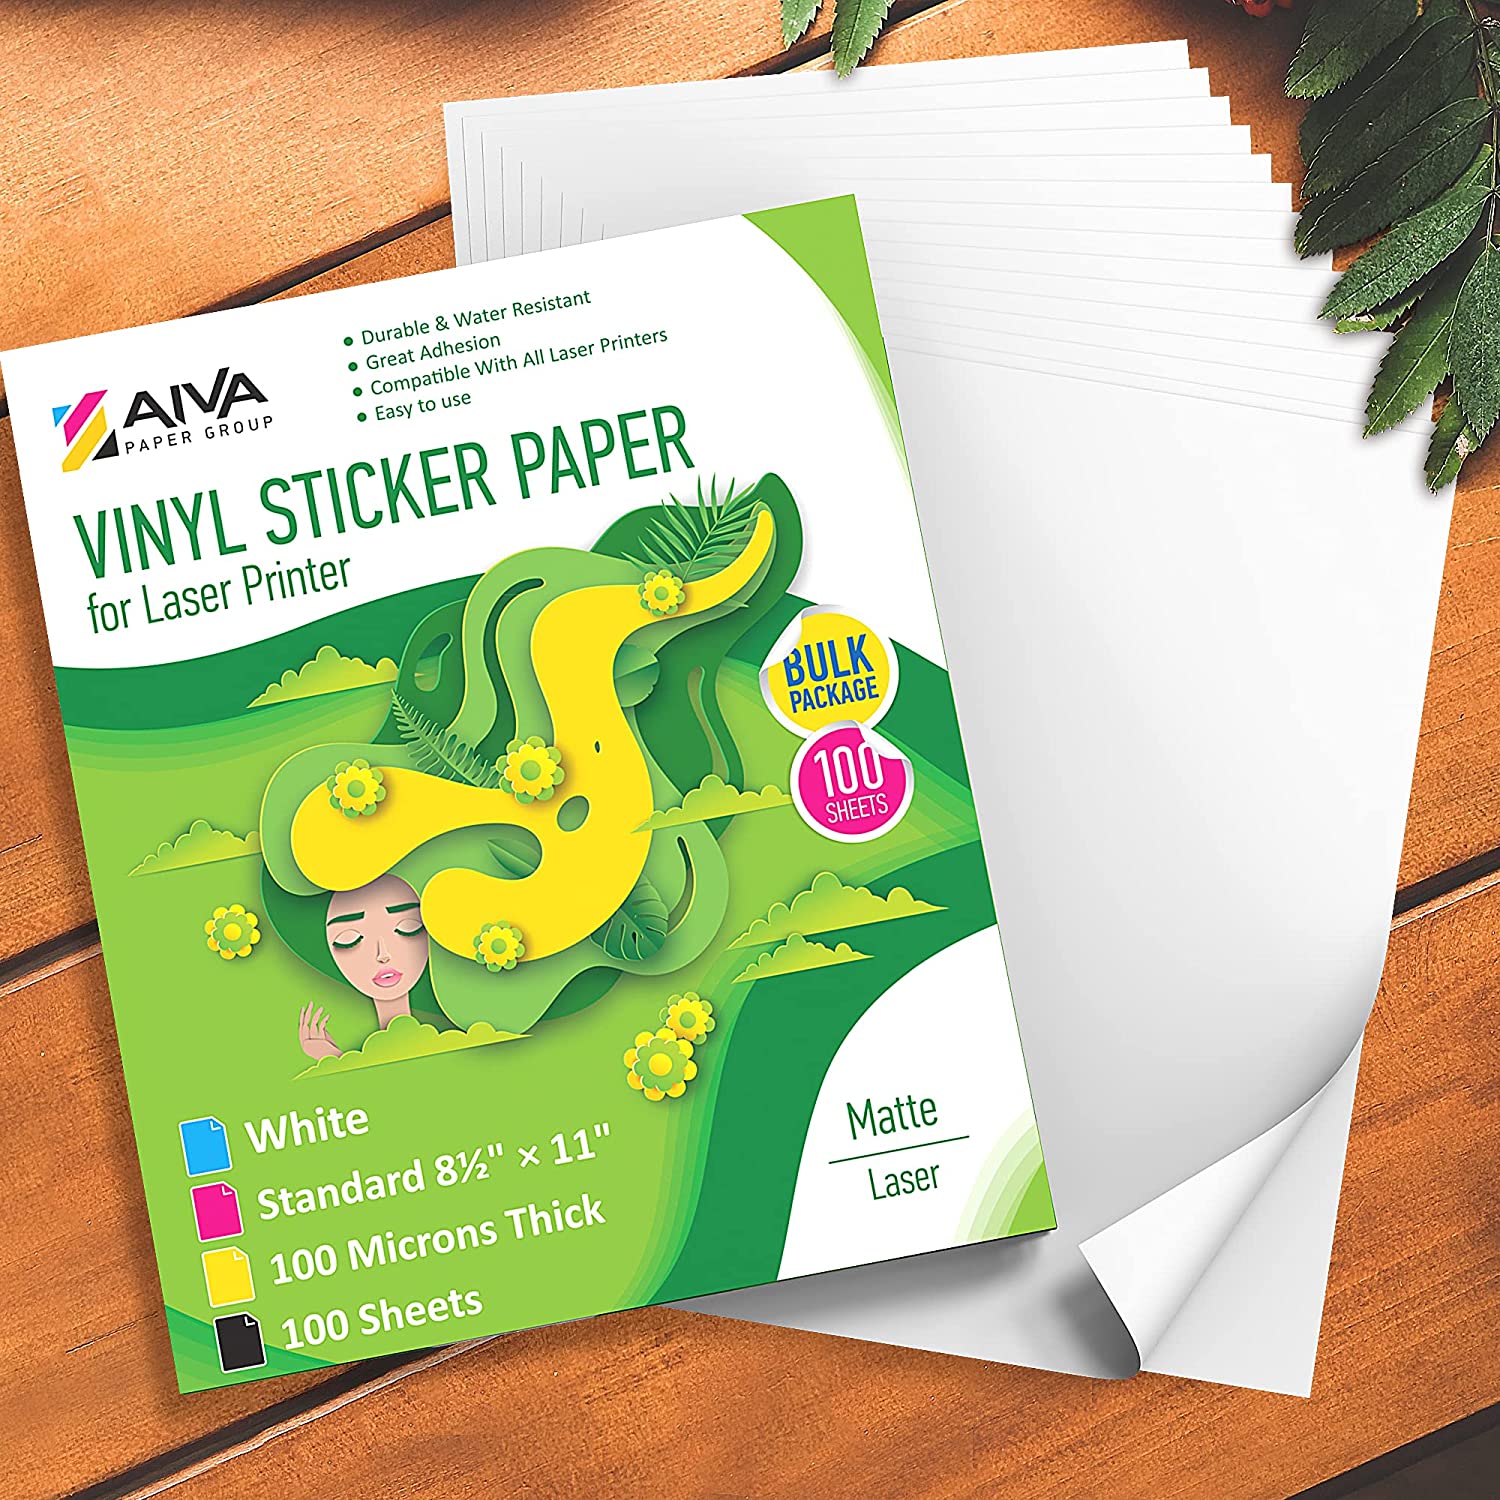 Printable Vinyl Sticker Paper Laser Glossy 100 sheets